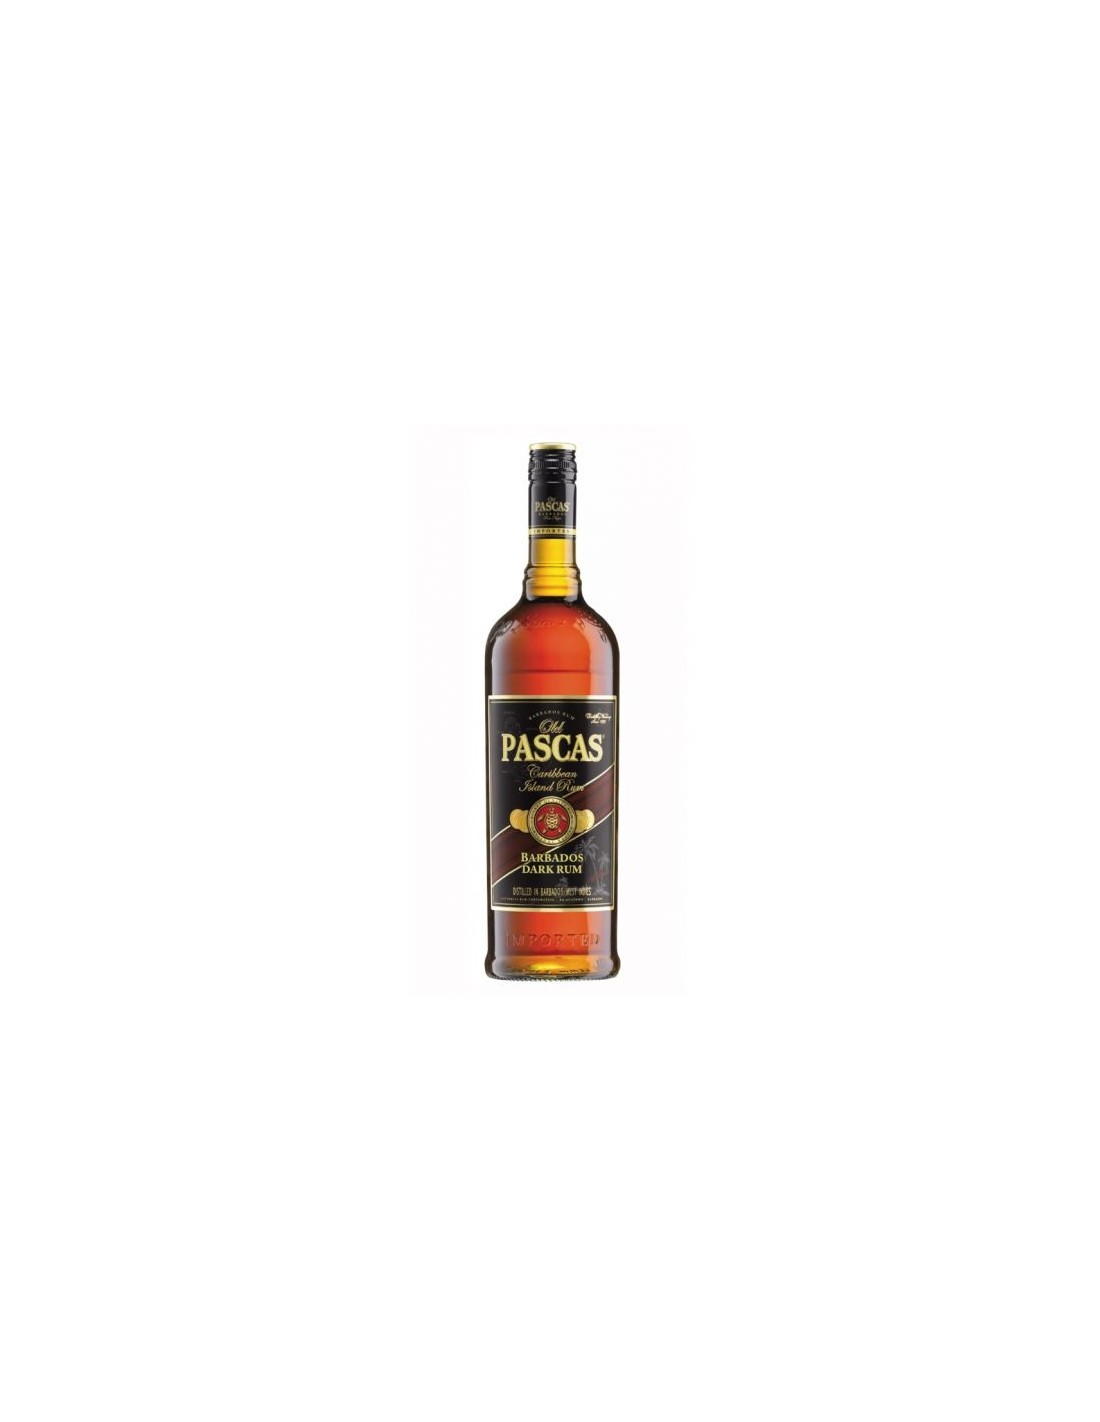 Rom negru Old Pascas Dark, 37.5% alc., 1L, Barbados alcooldiscount.ro